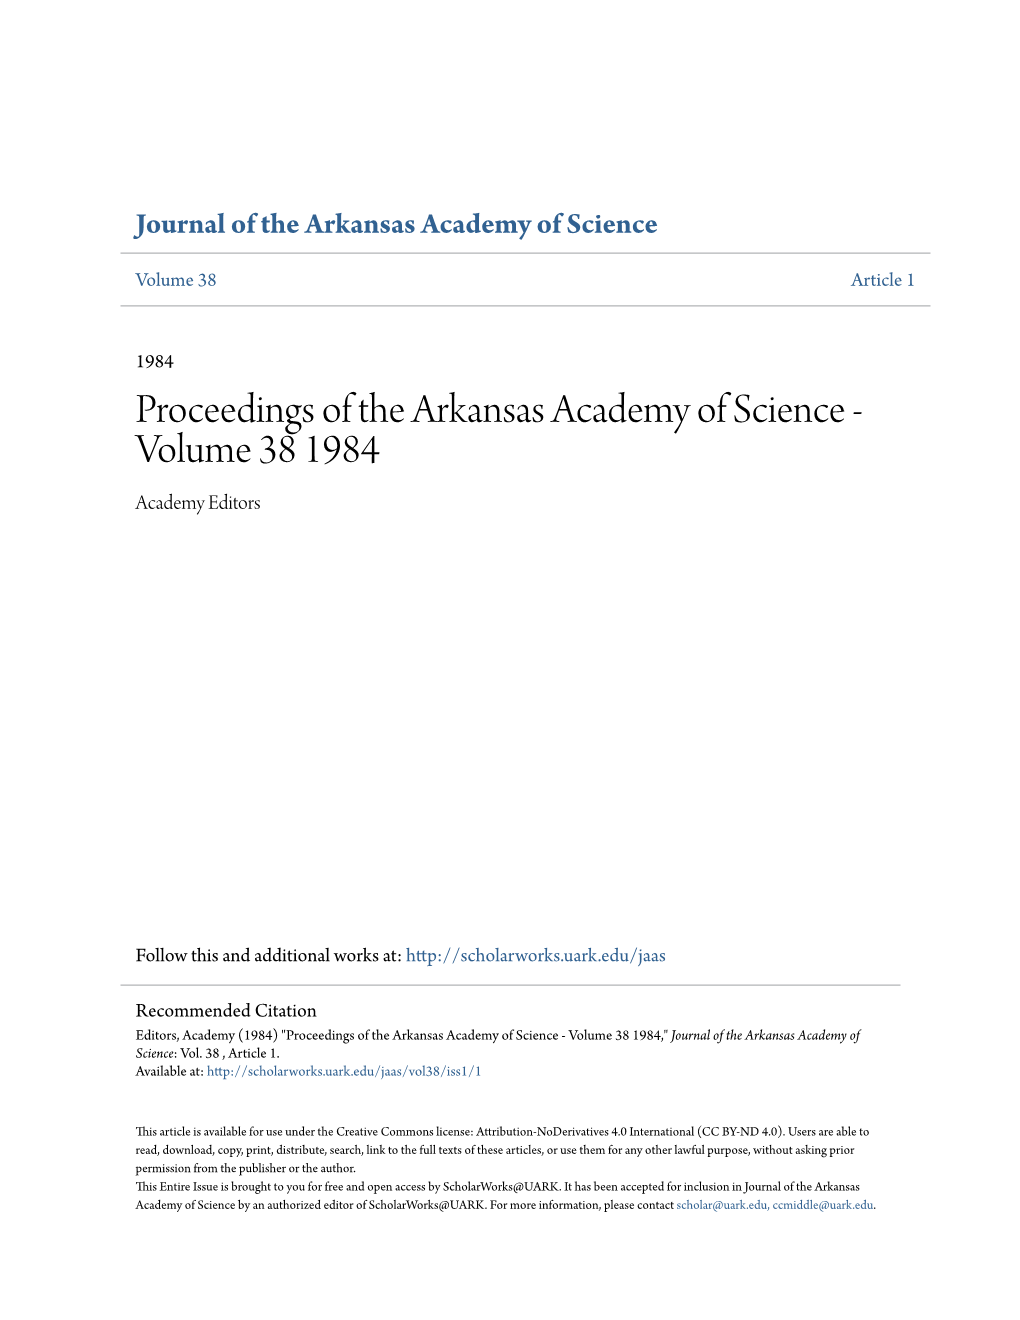 Proceedings of the Arkansas Academy of Science - Volume 38 1984 Academy Editors